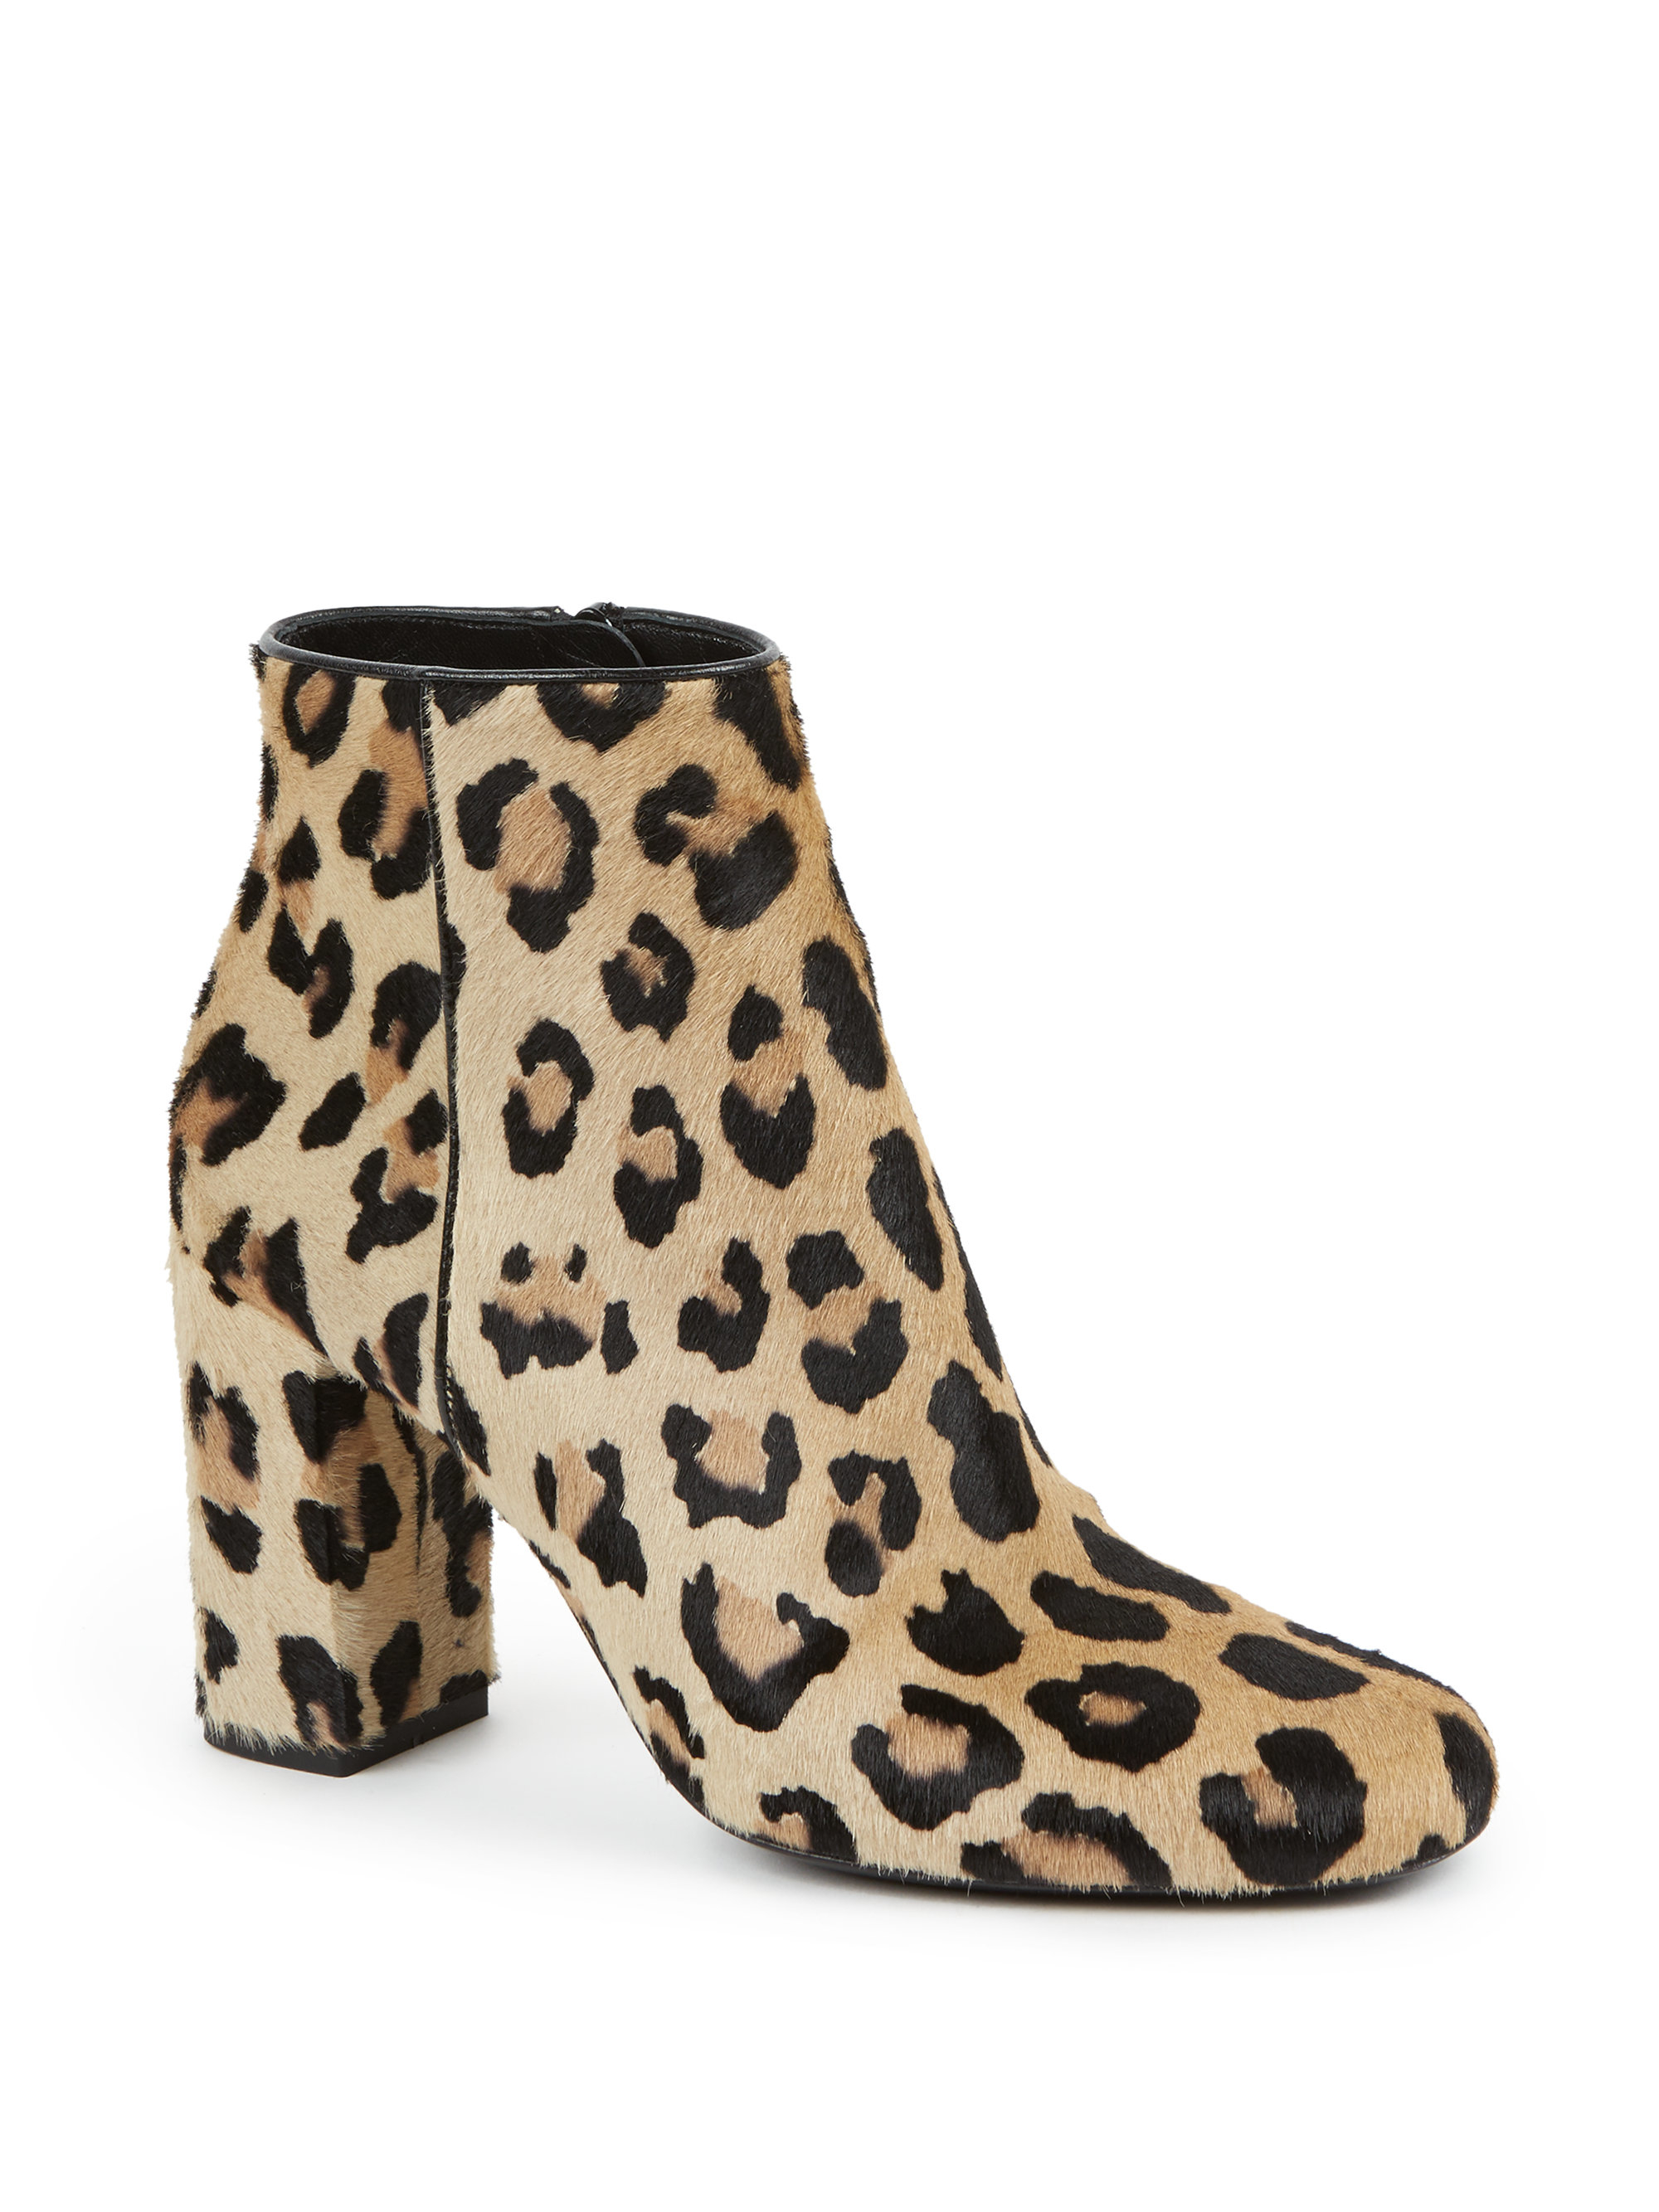 Saint Laurent Babies Leopard-print Pony Hair Ankle Boots in Natural - Lyst